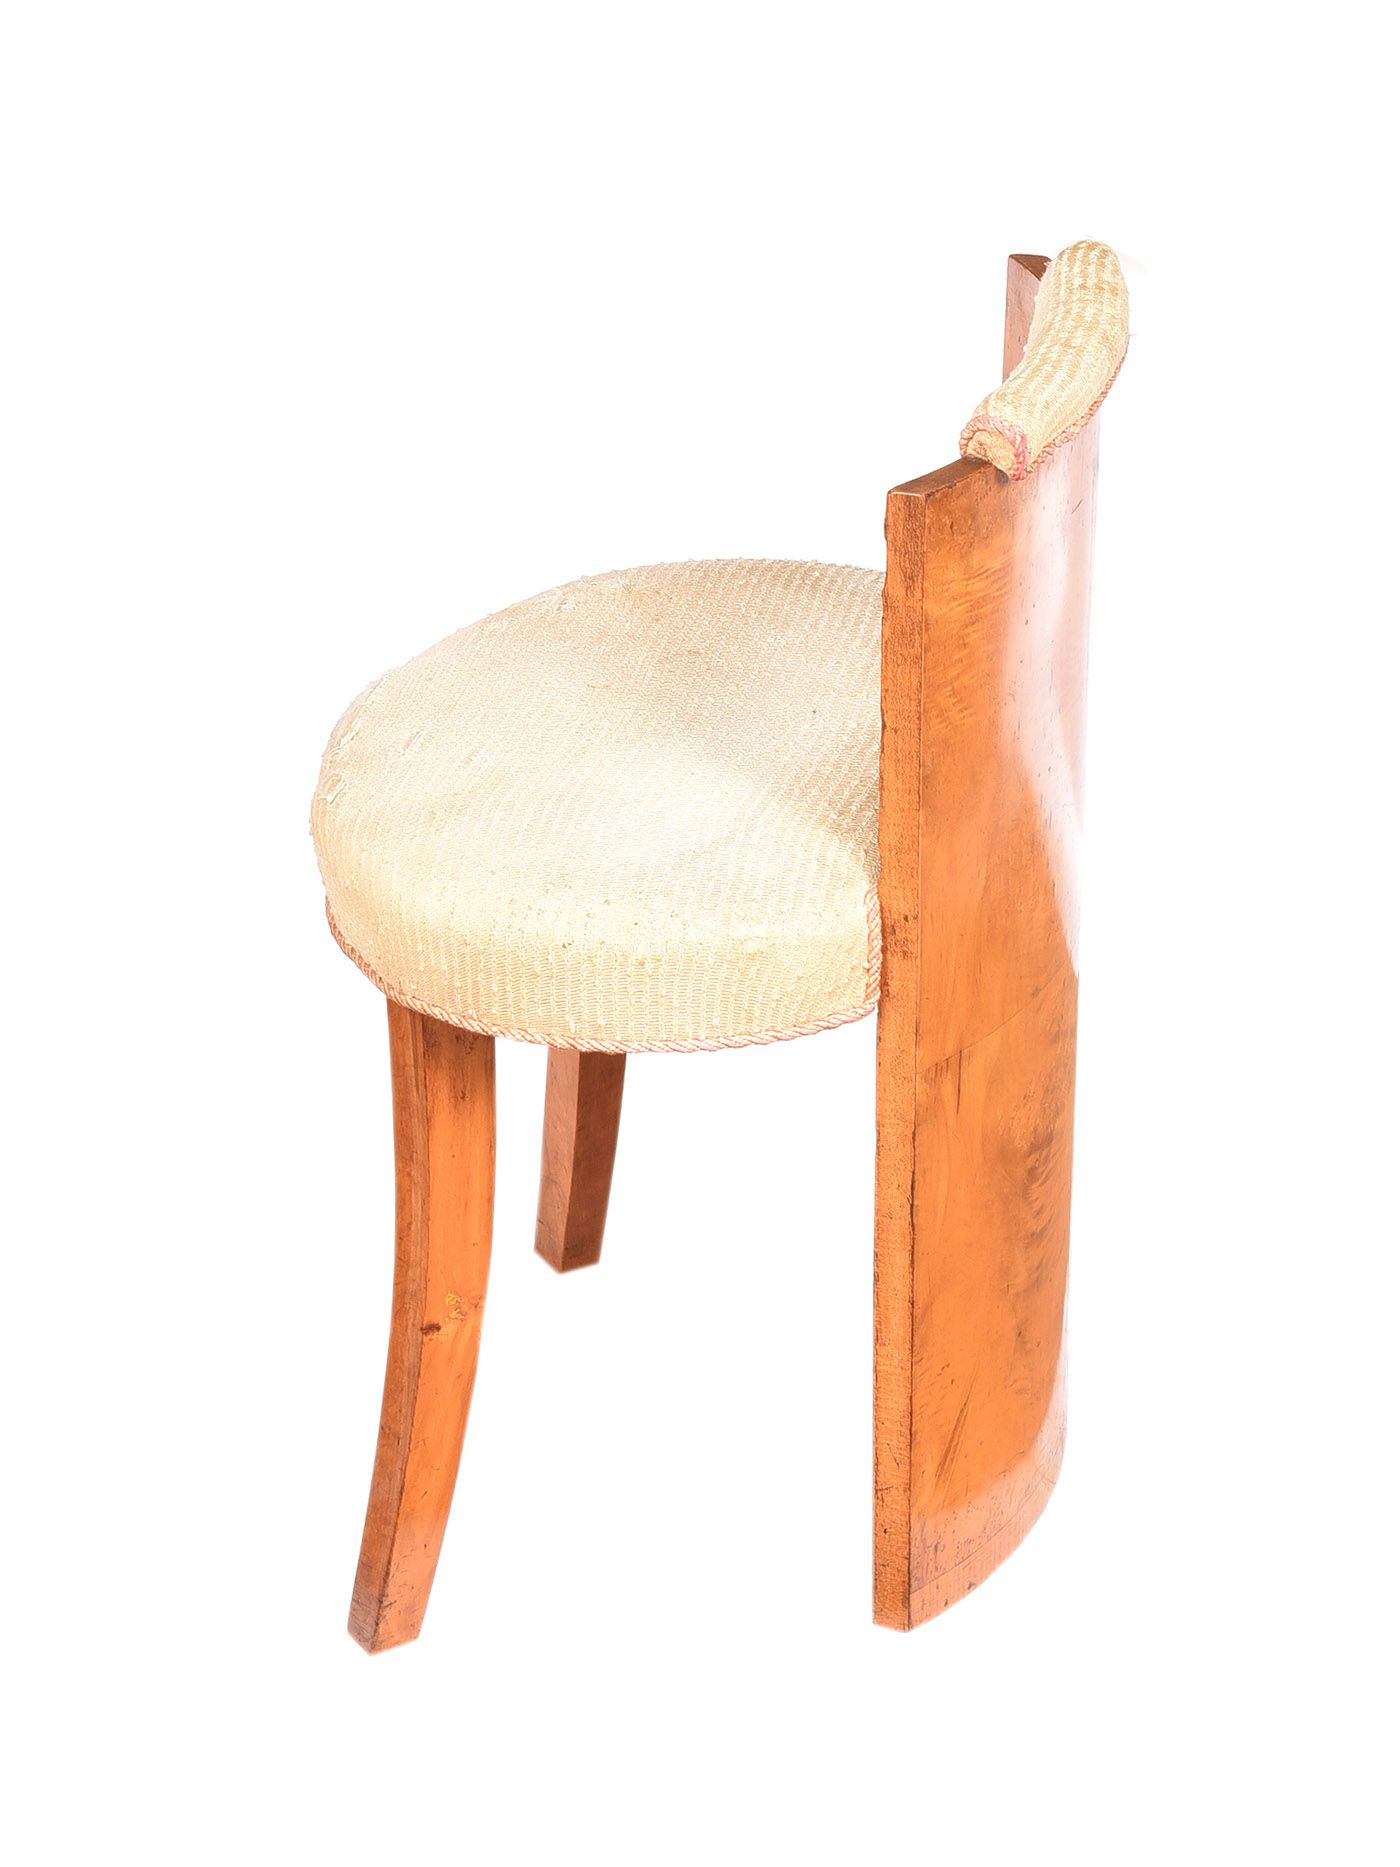 ART DECO BURR WALNUT BEDROOM SEAT at Ross's Online Art Auctions